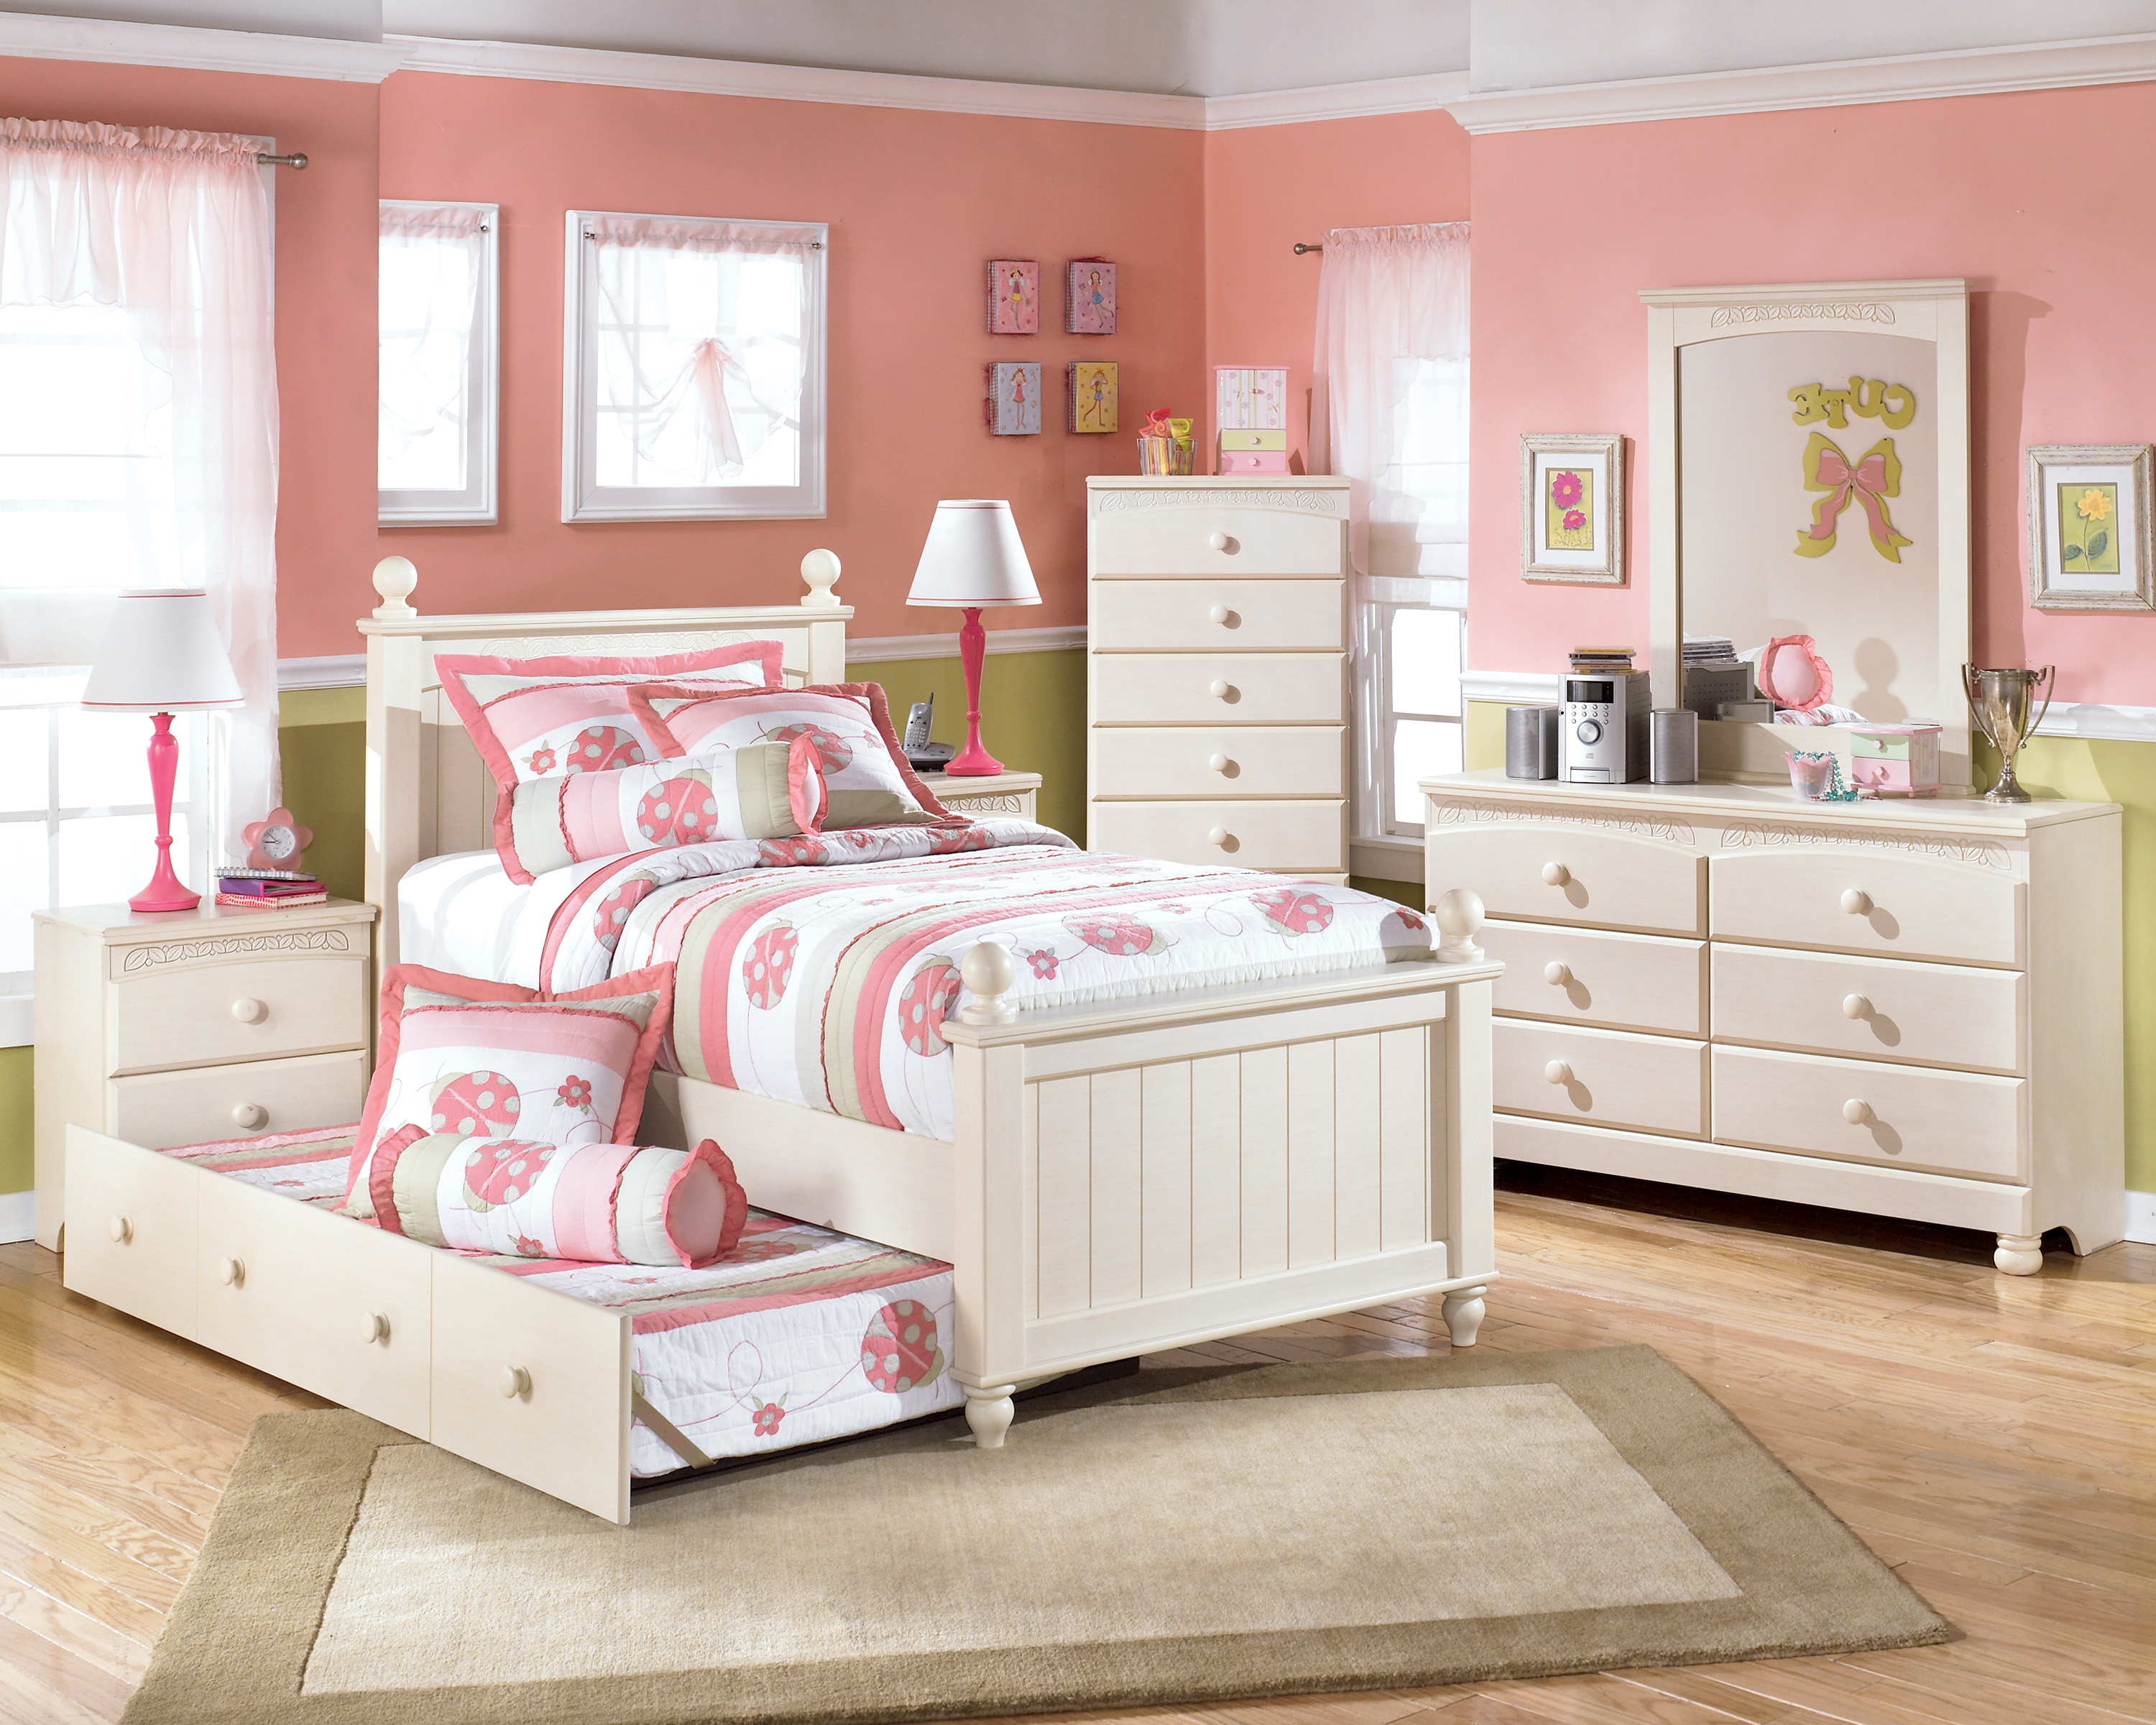 Master ... Kids Bedroom Furniture Sets For Boys With Blue Themes Room Furniture white childrens bedroom furniture